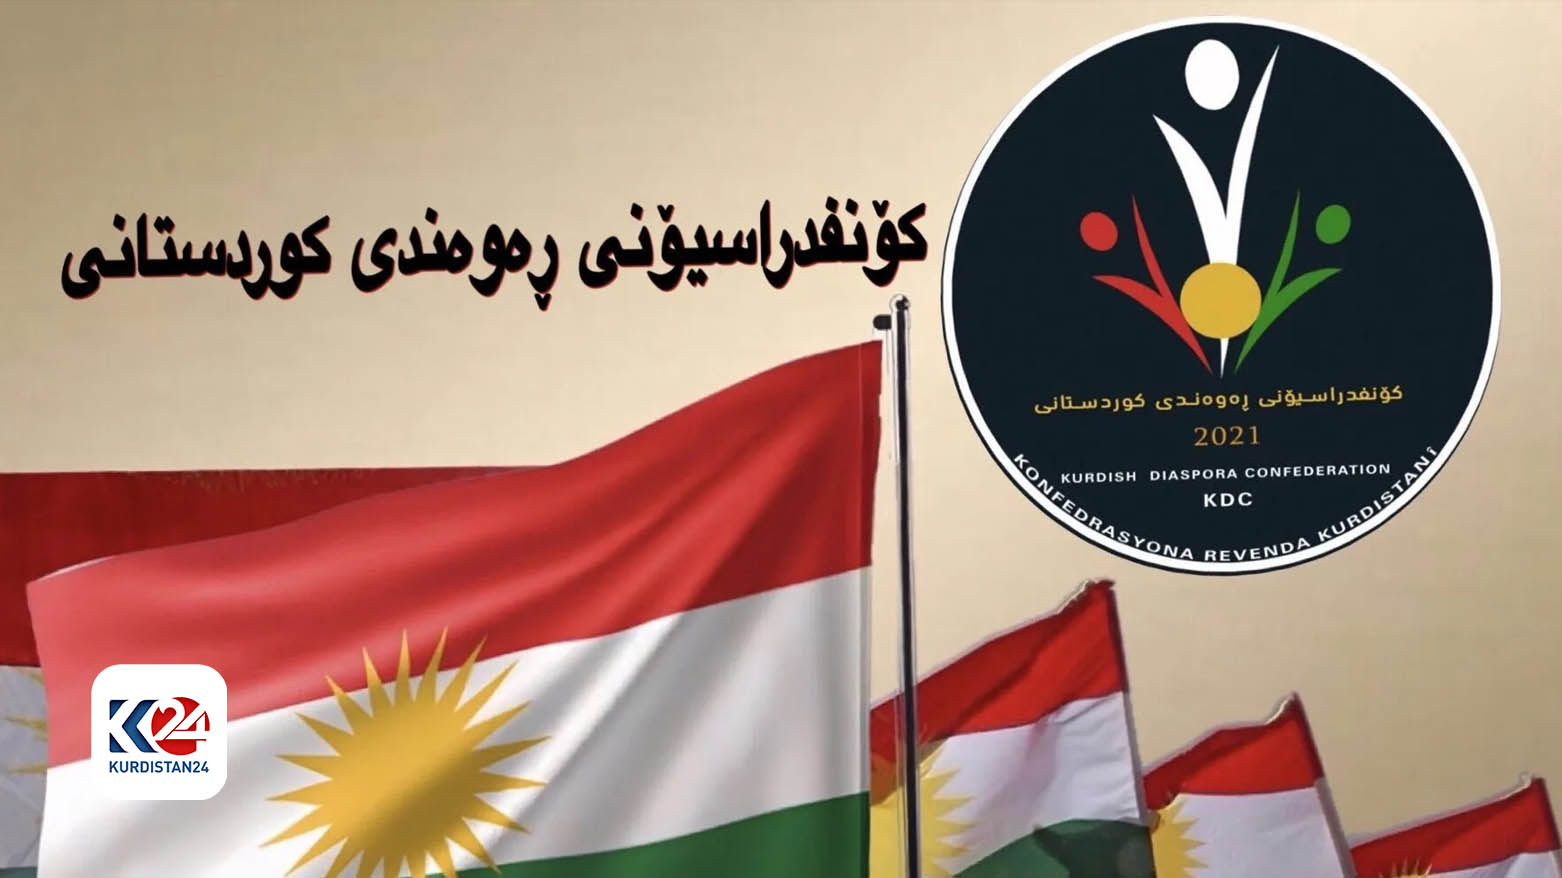 Konfederasiyona Revenda Kurdistanî